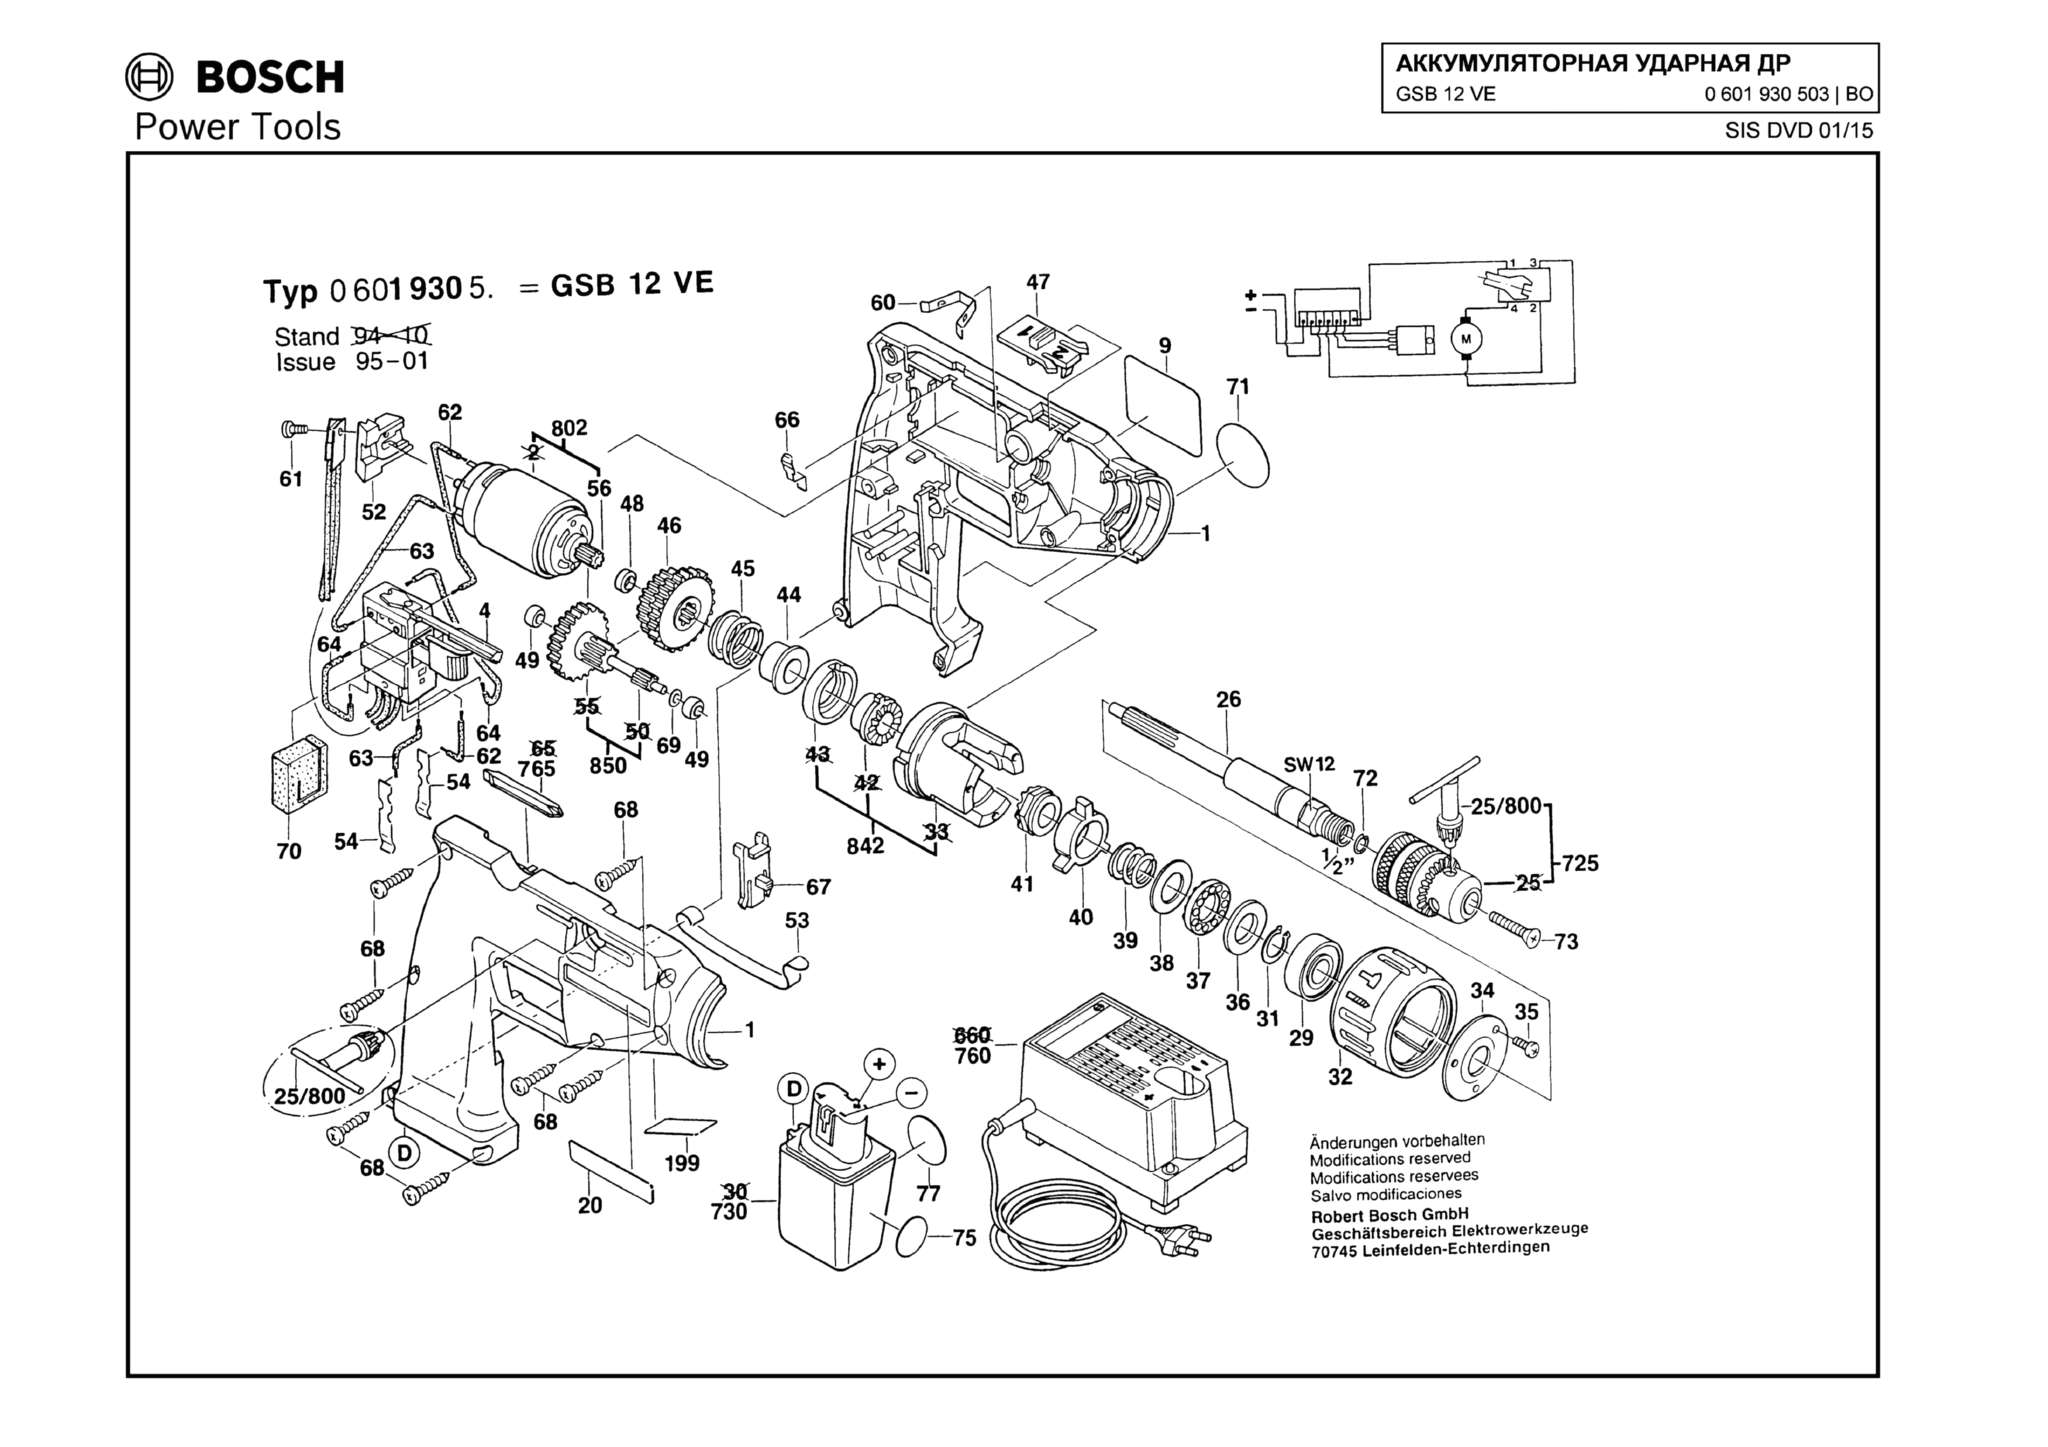 Запчасти, схема и деталировка Bosch GSB 12 VE (ТИП 0601930503)